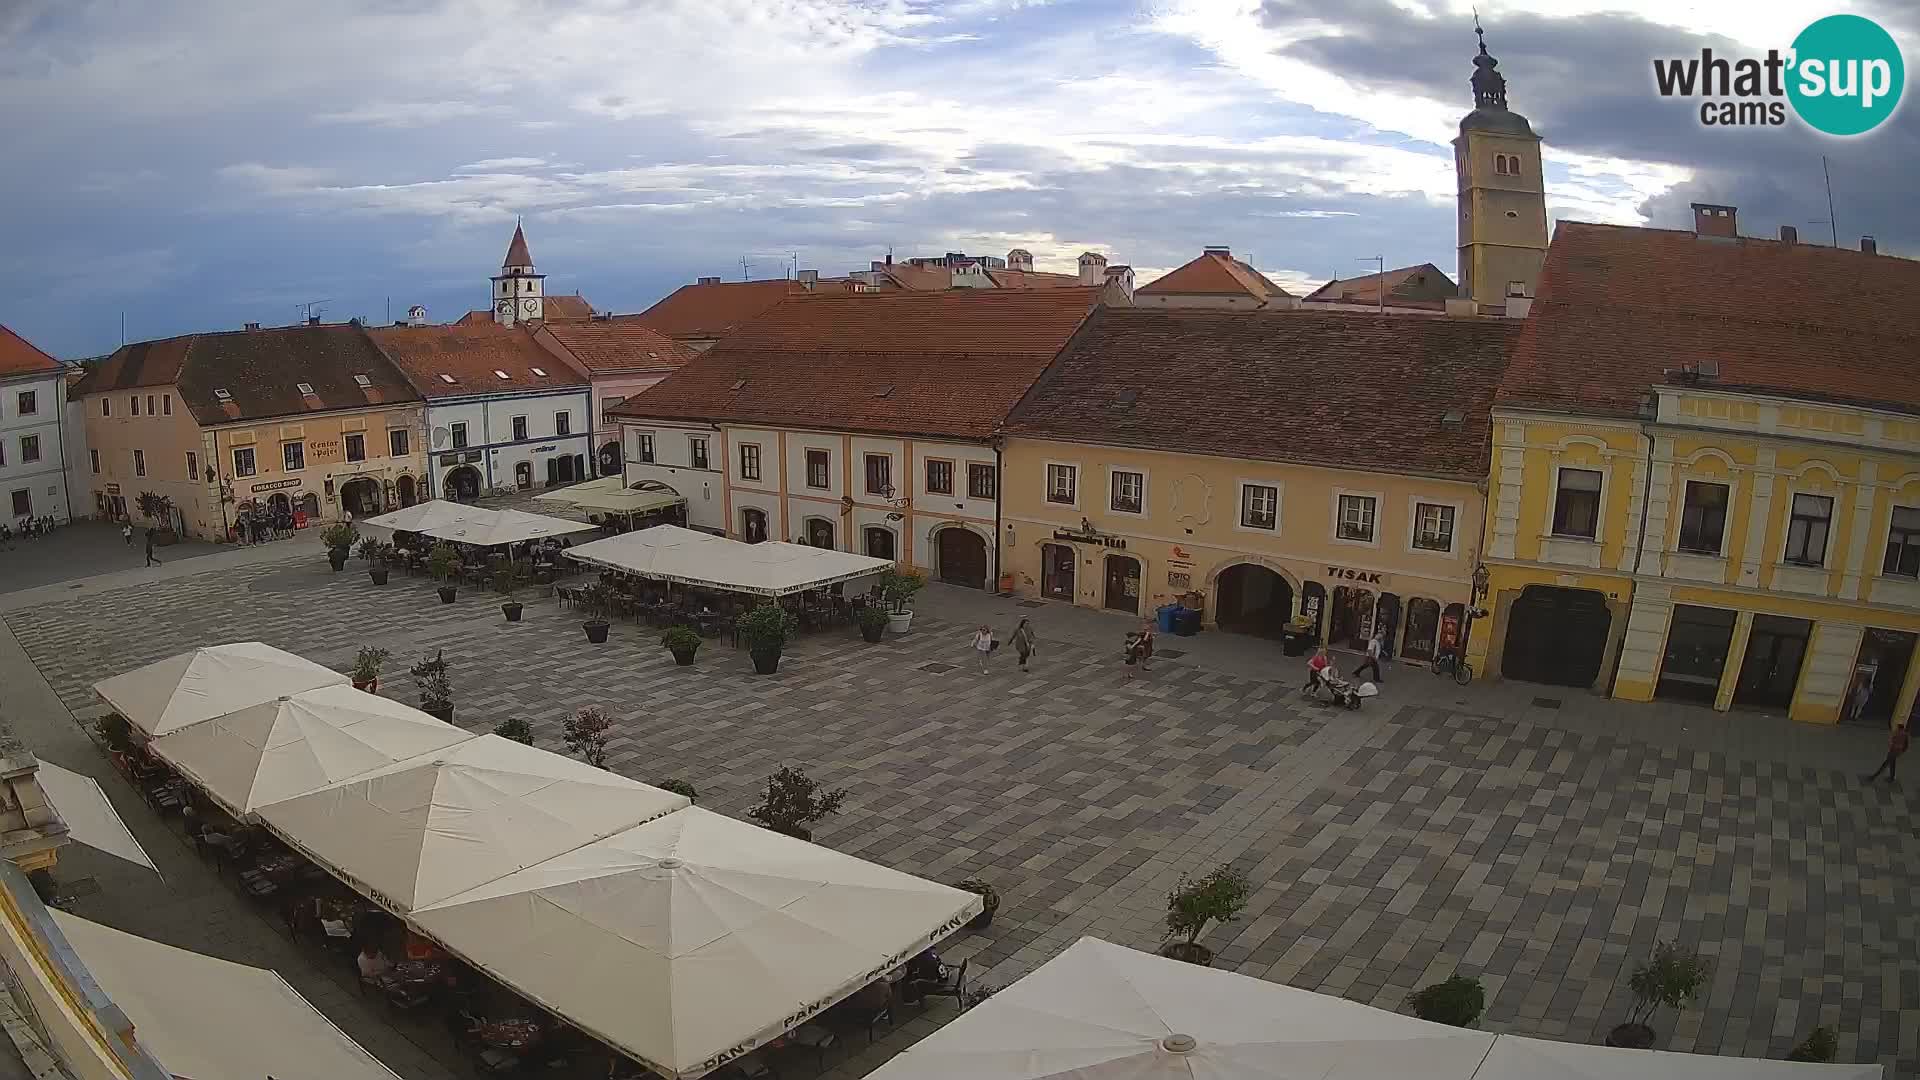 The King Tomislav square